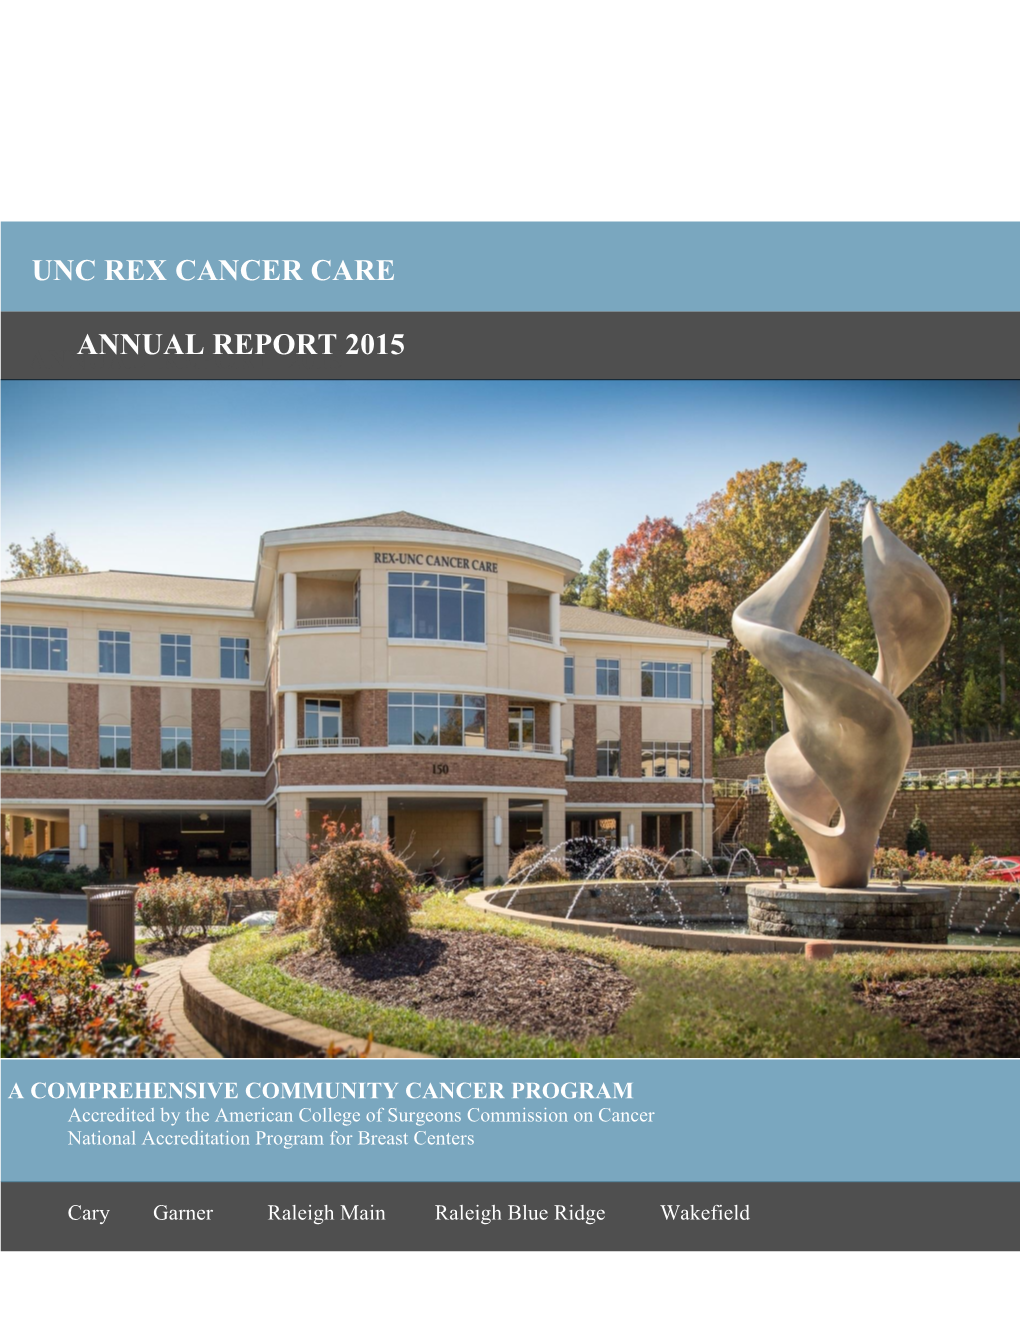 UNC REX Cancer Care Annual Report 2015